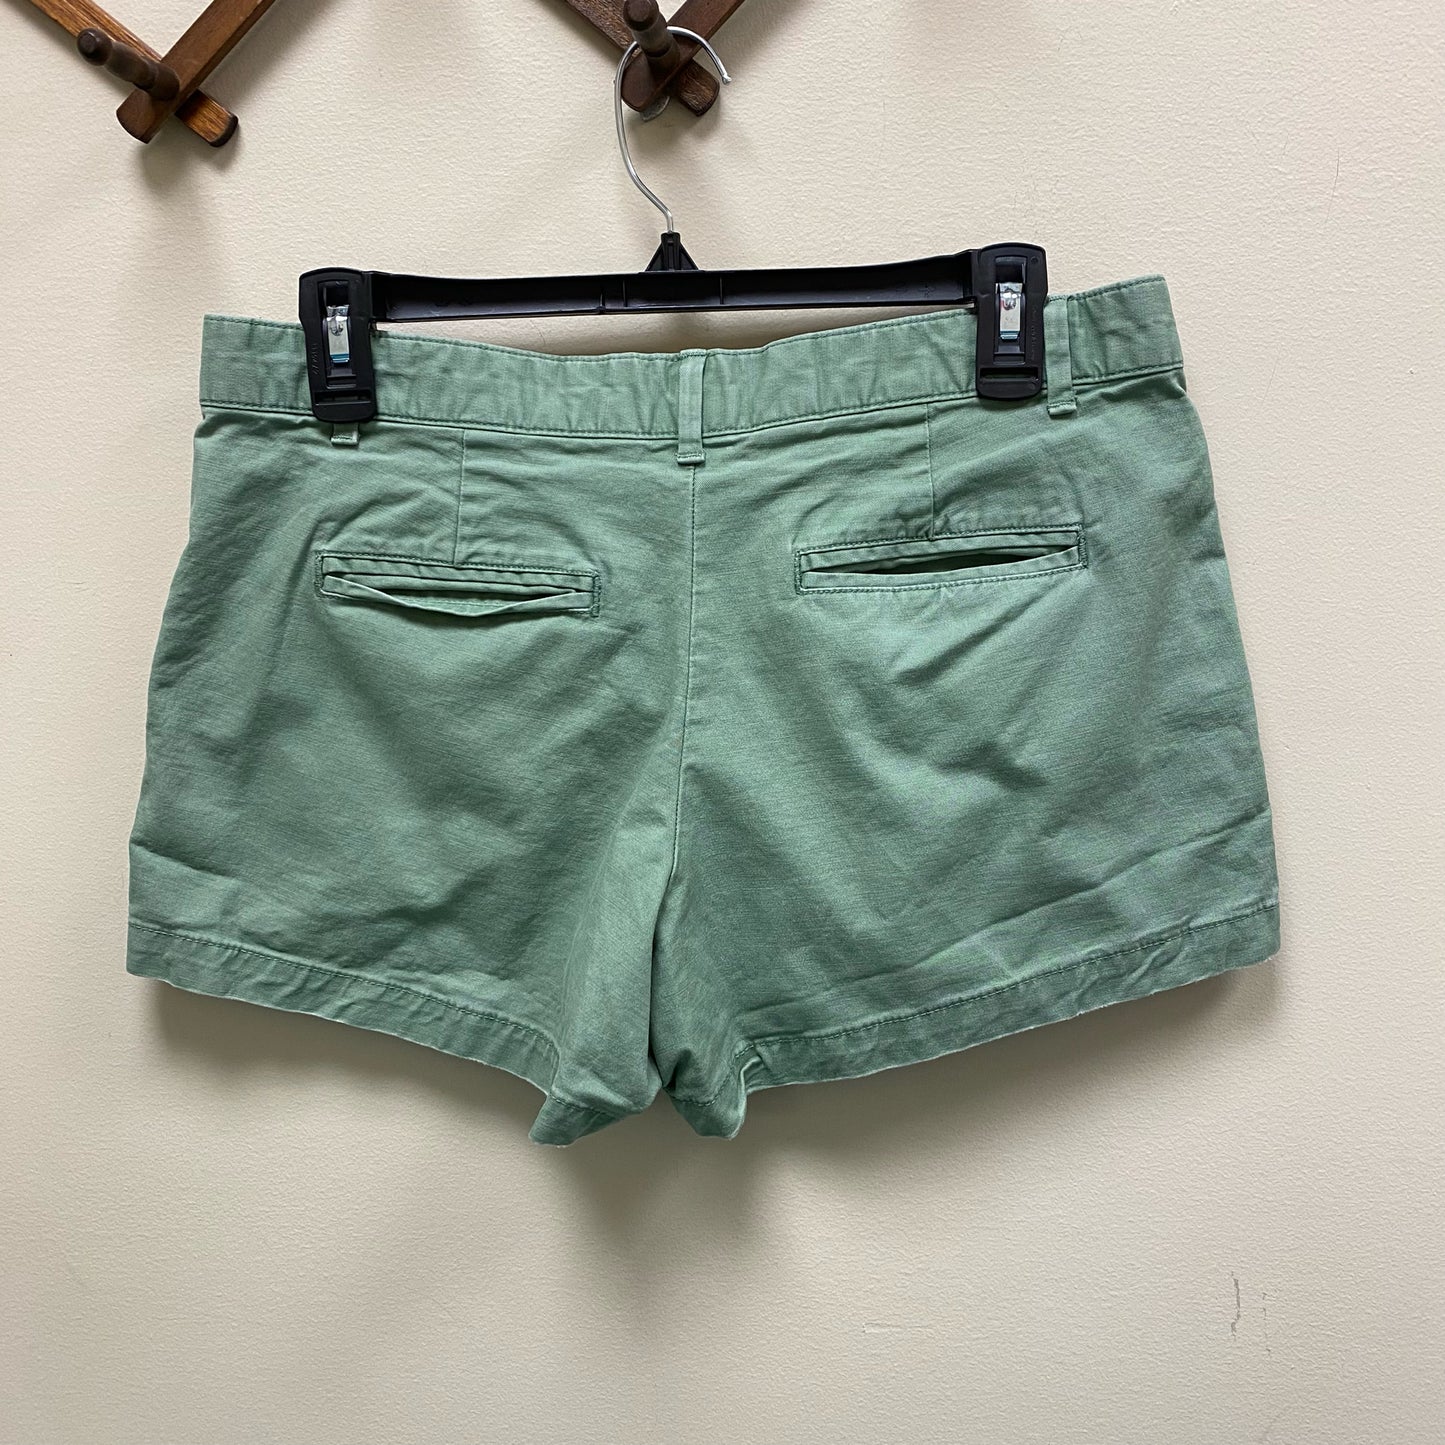 Gap "Summer Short" Chino Shorts - Size 6